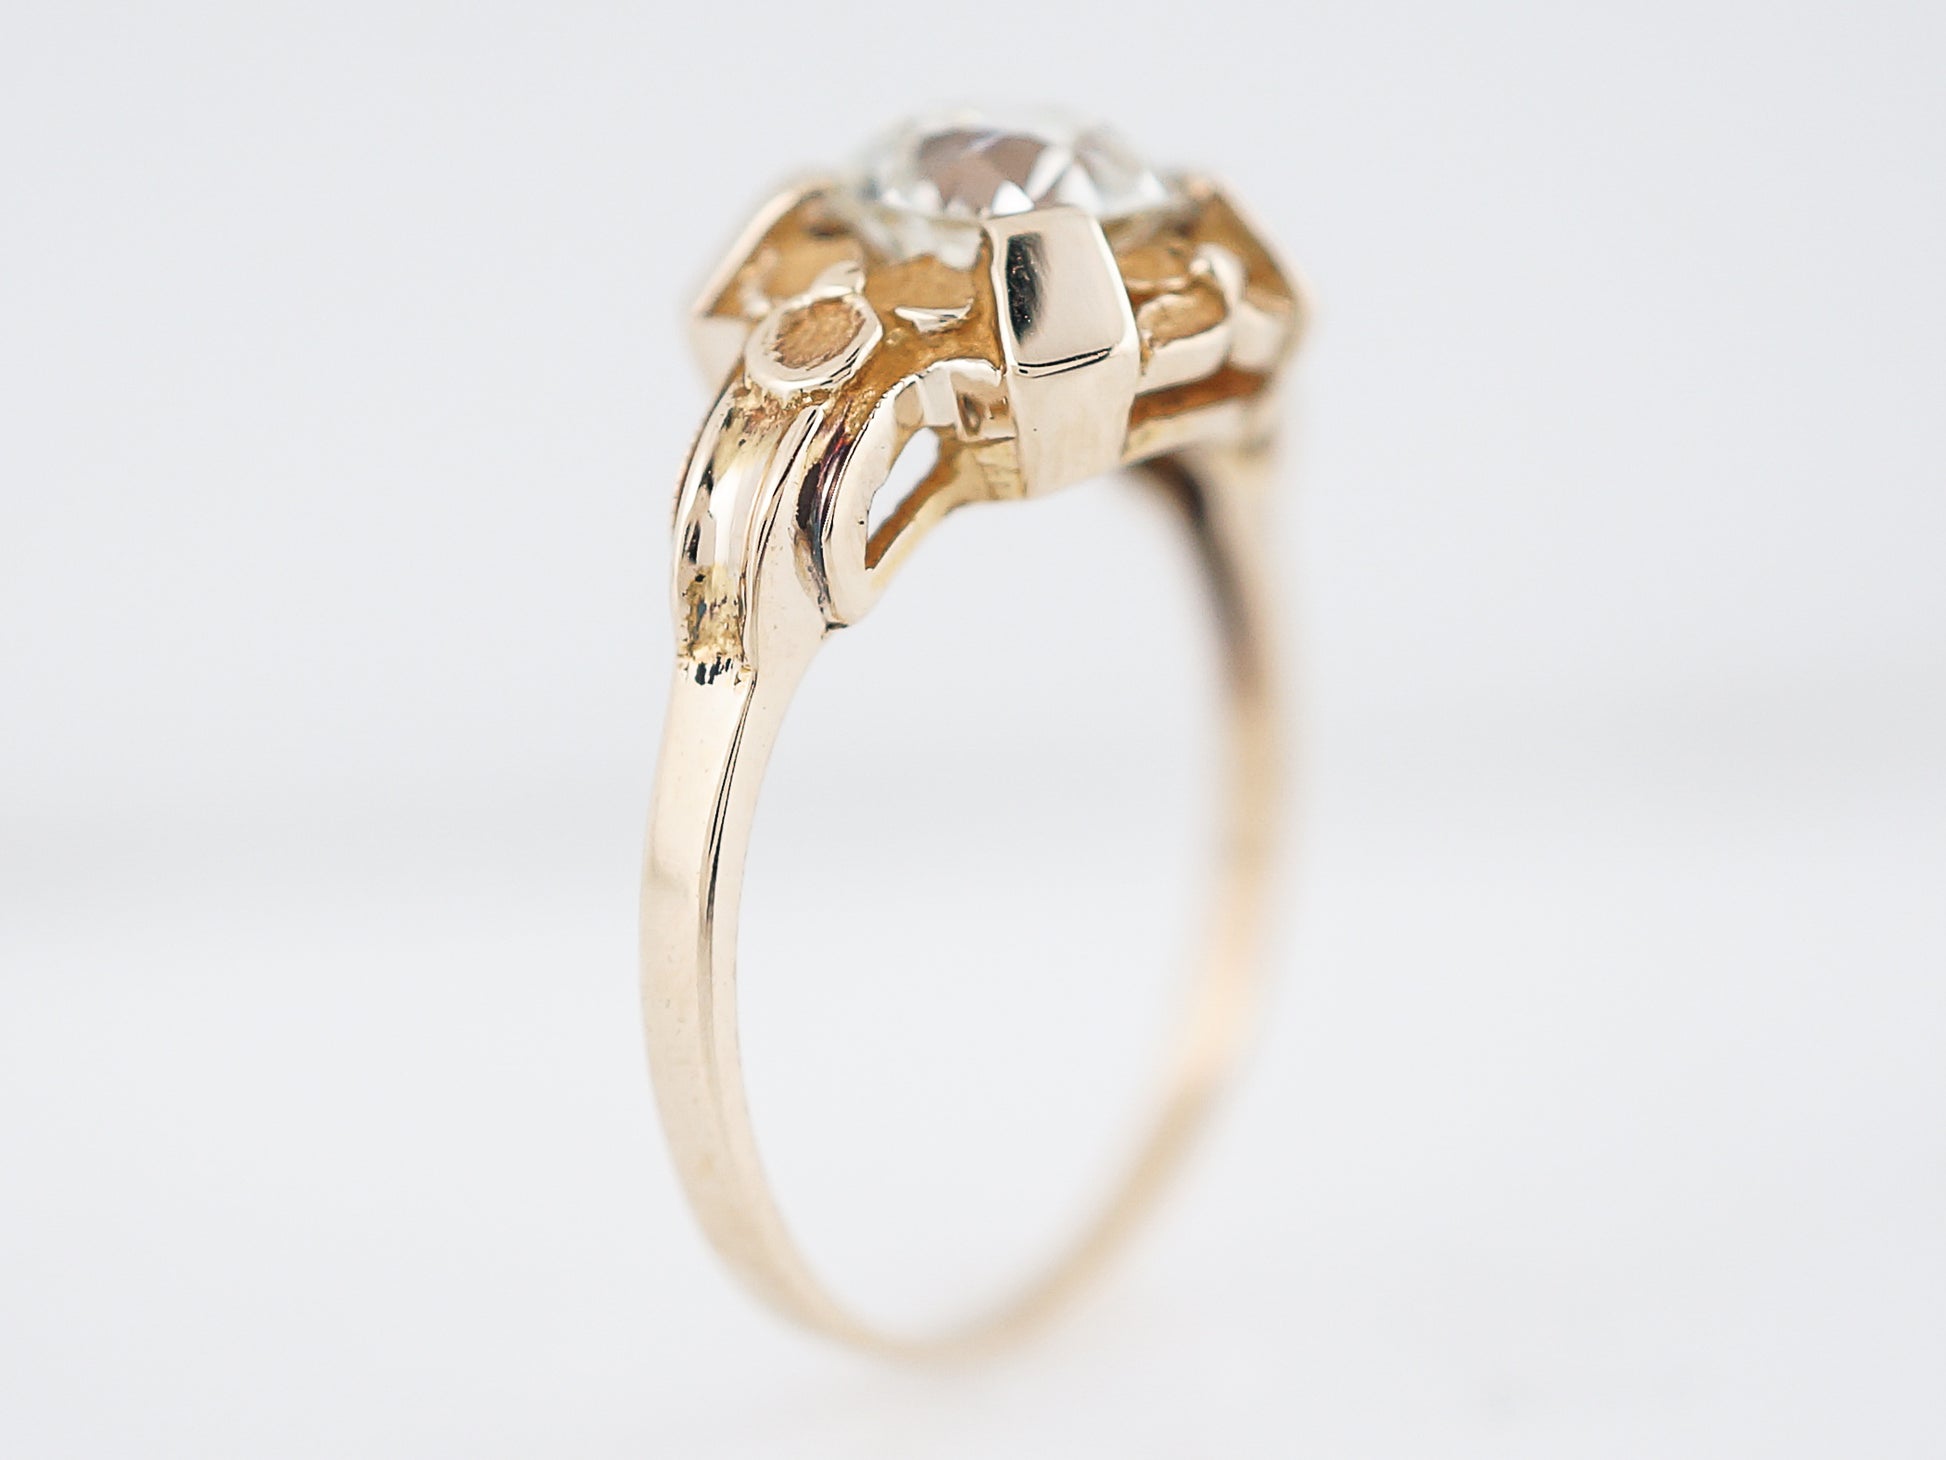 Antique Enagagement Ring Art Deco 1.00 Old European Cut Diamond in 14k Yellow Gold